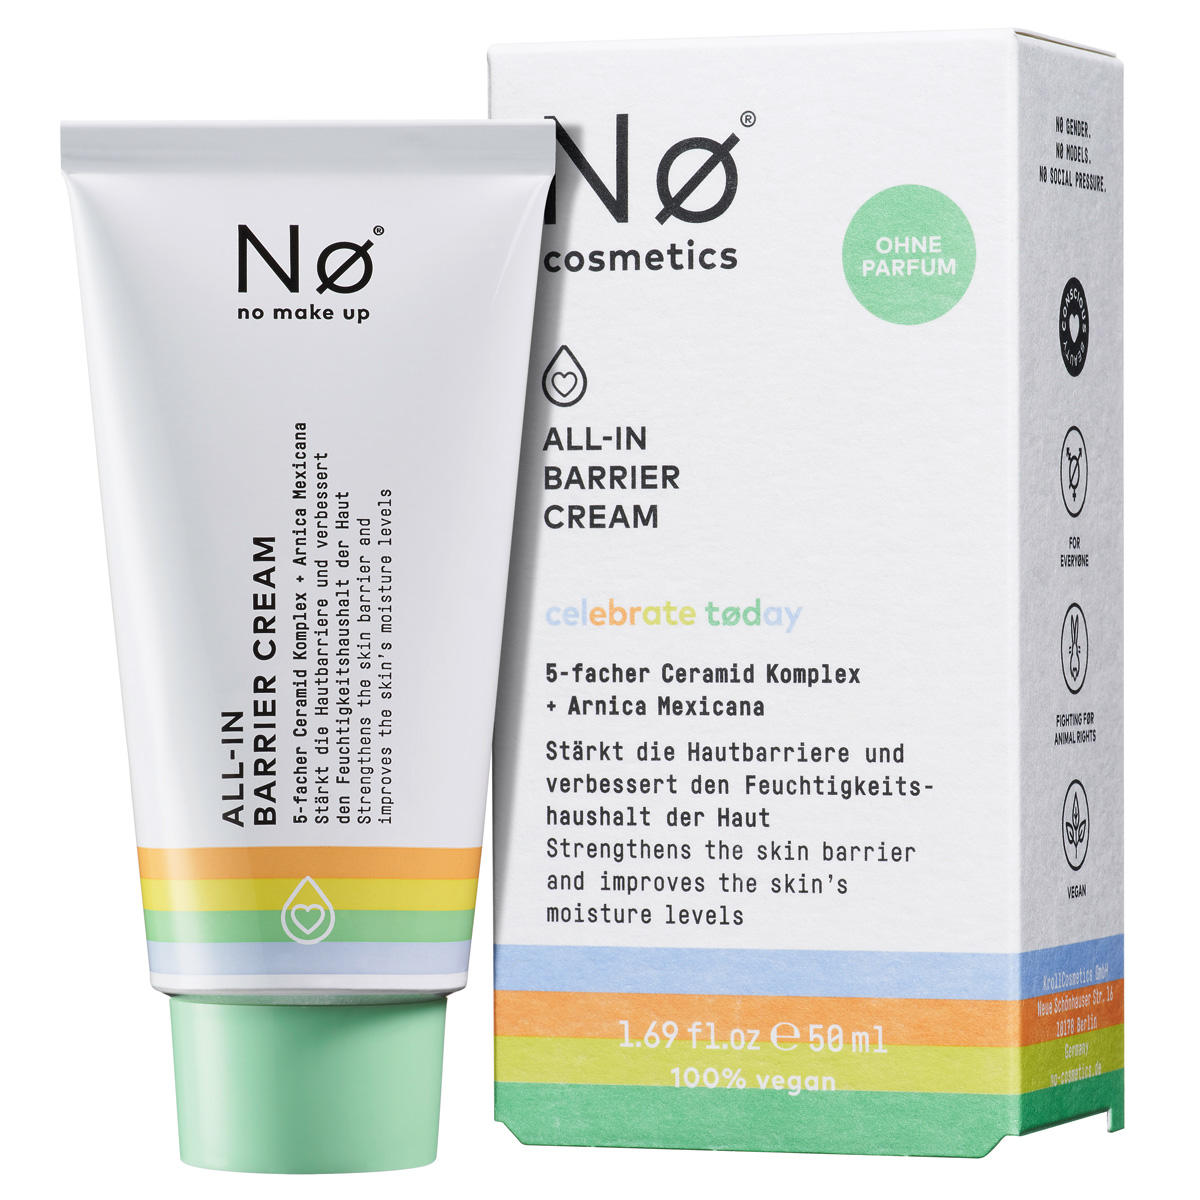 Nø Cosmetics celebrate tøday All-In Barrier Cream 50 ml - 1